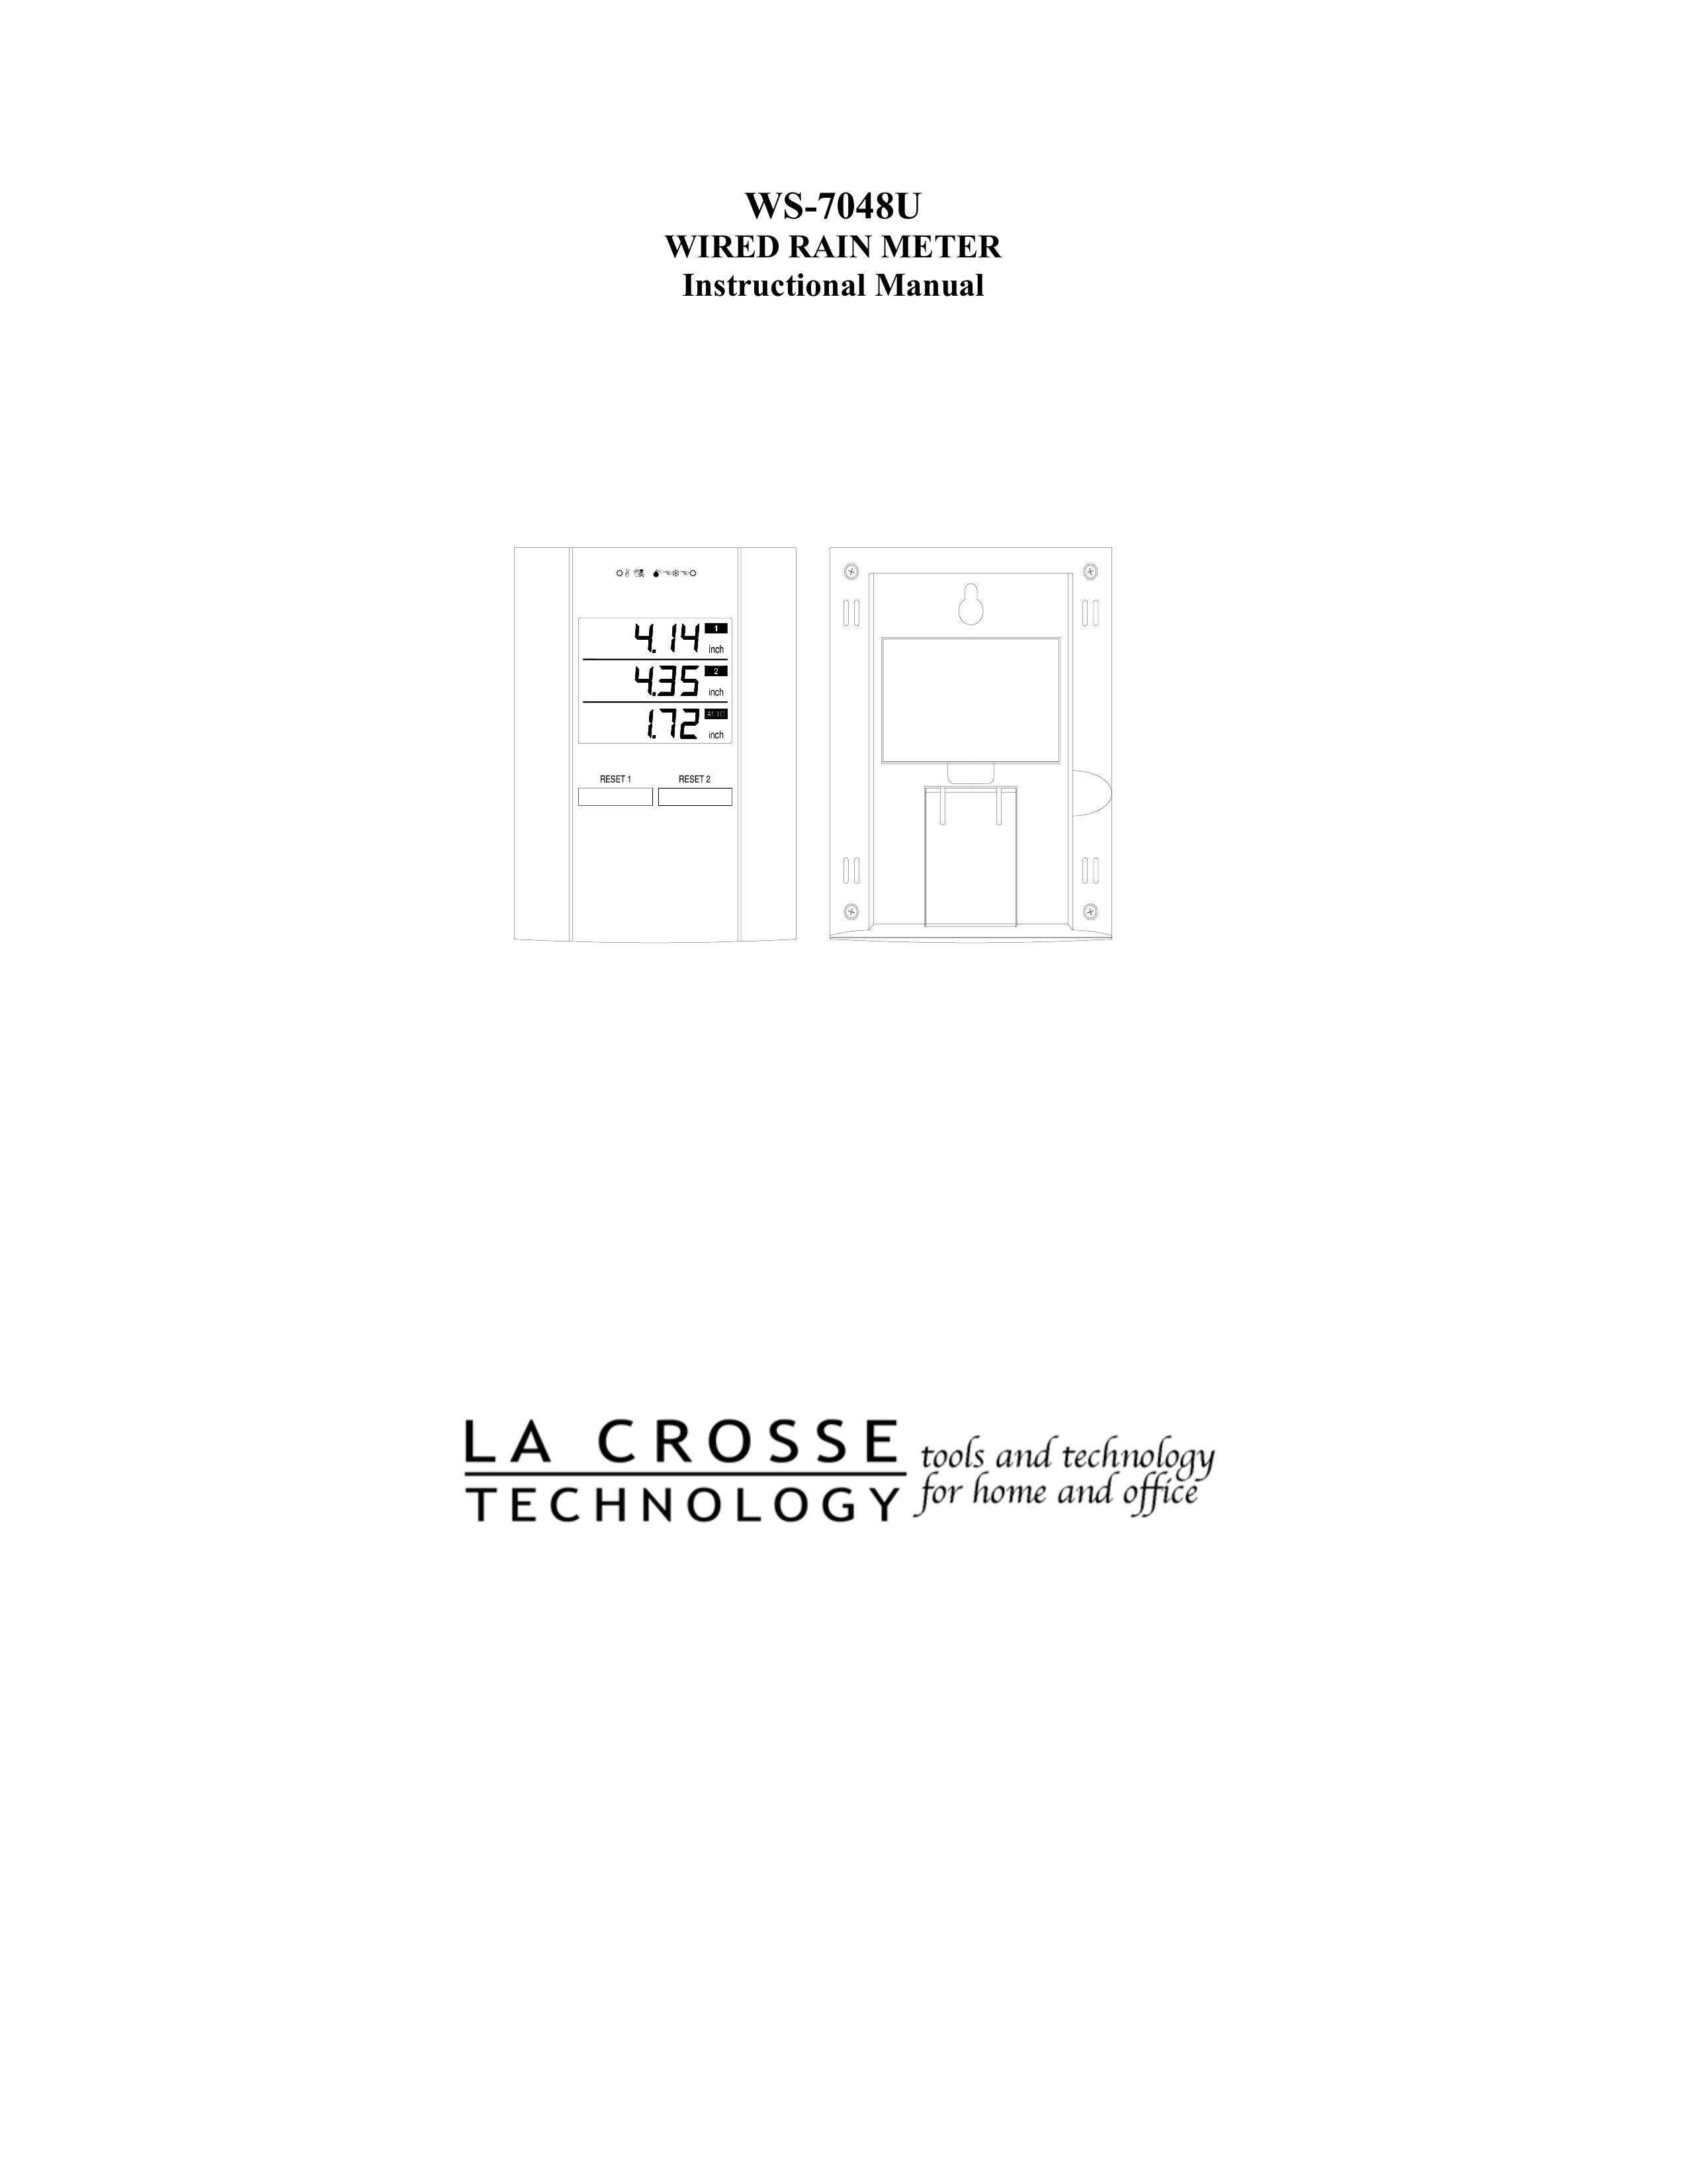 La Crosse Technology WS-7048U Weather Radio User Manual